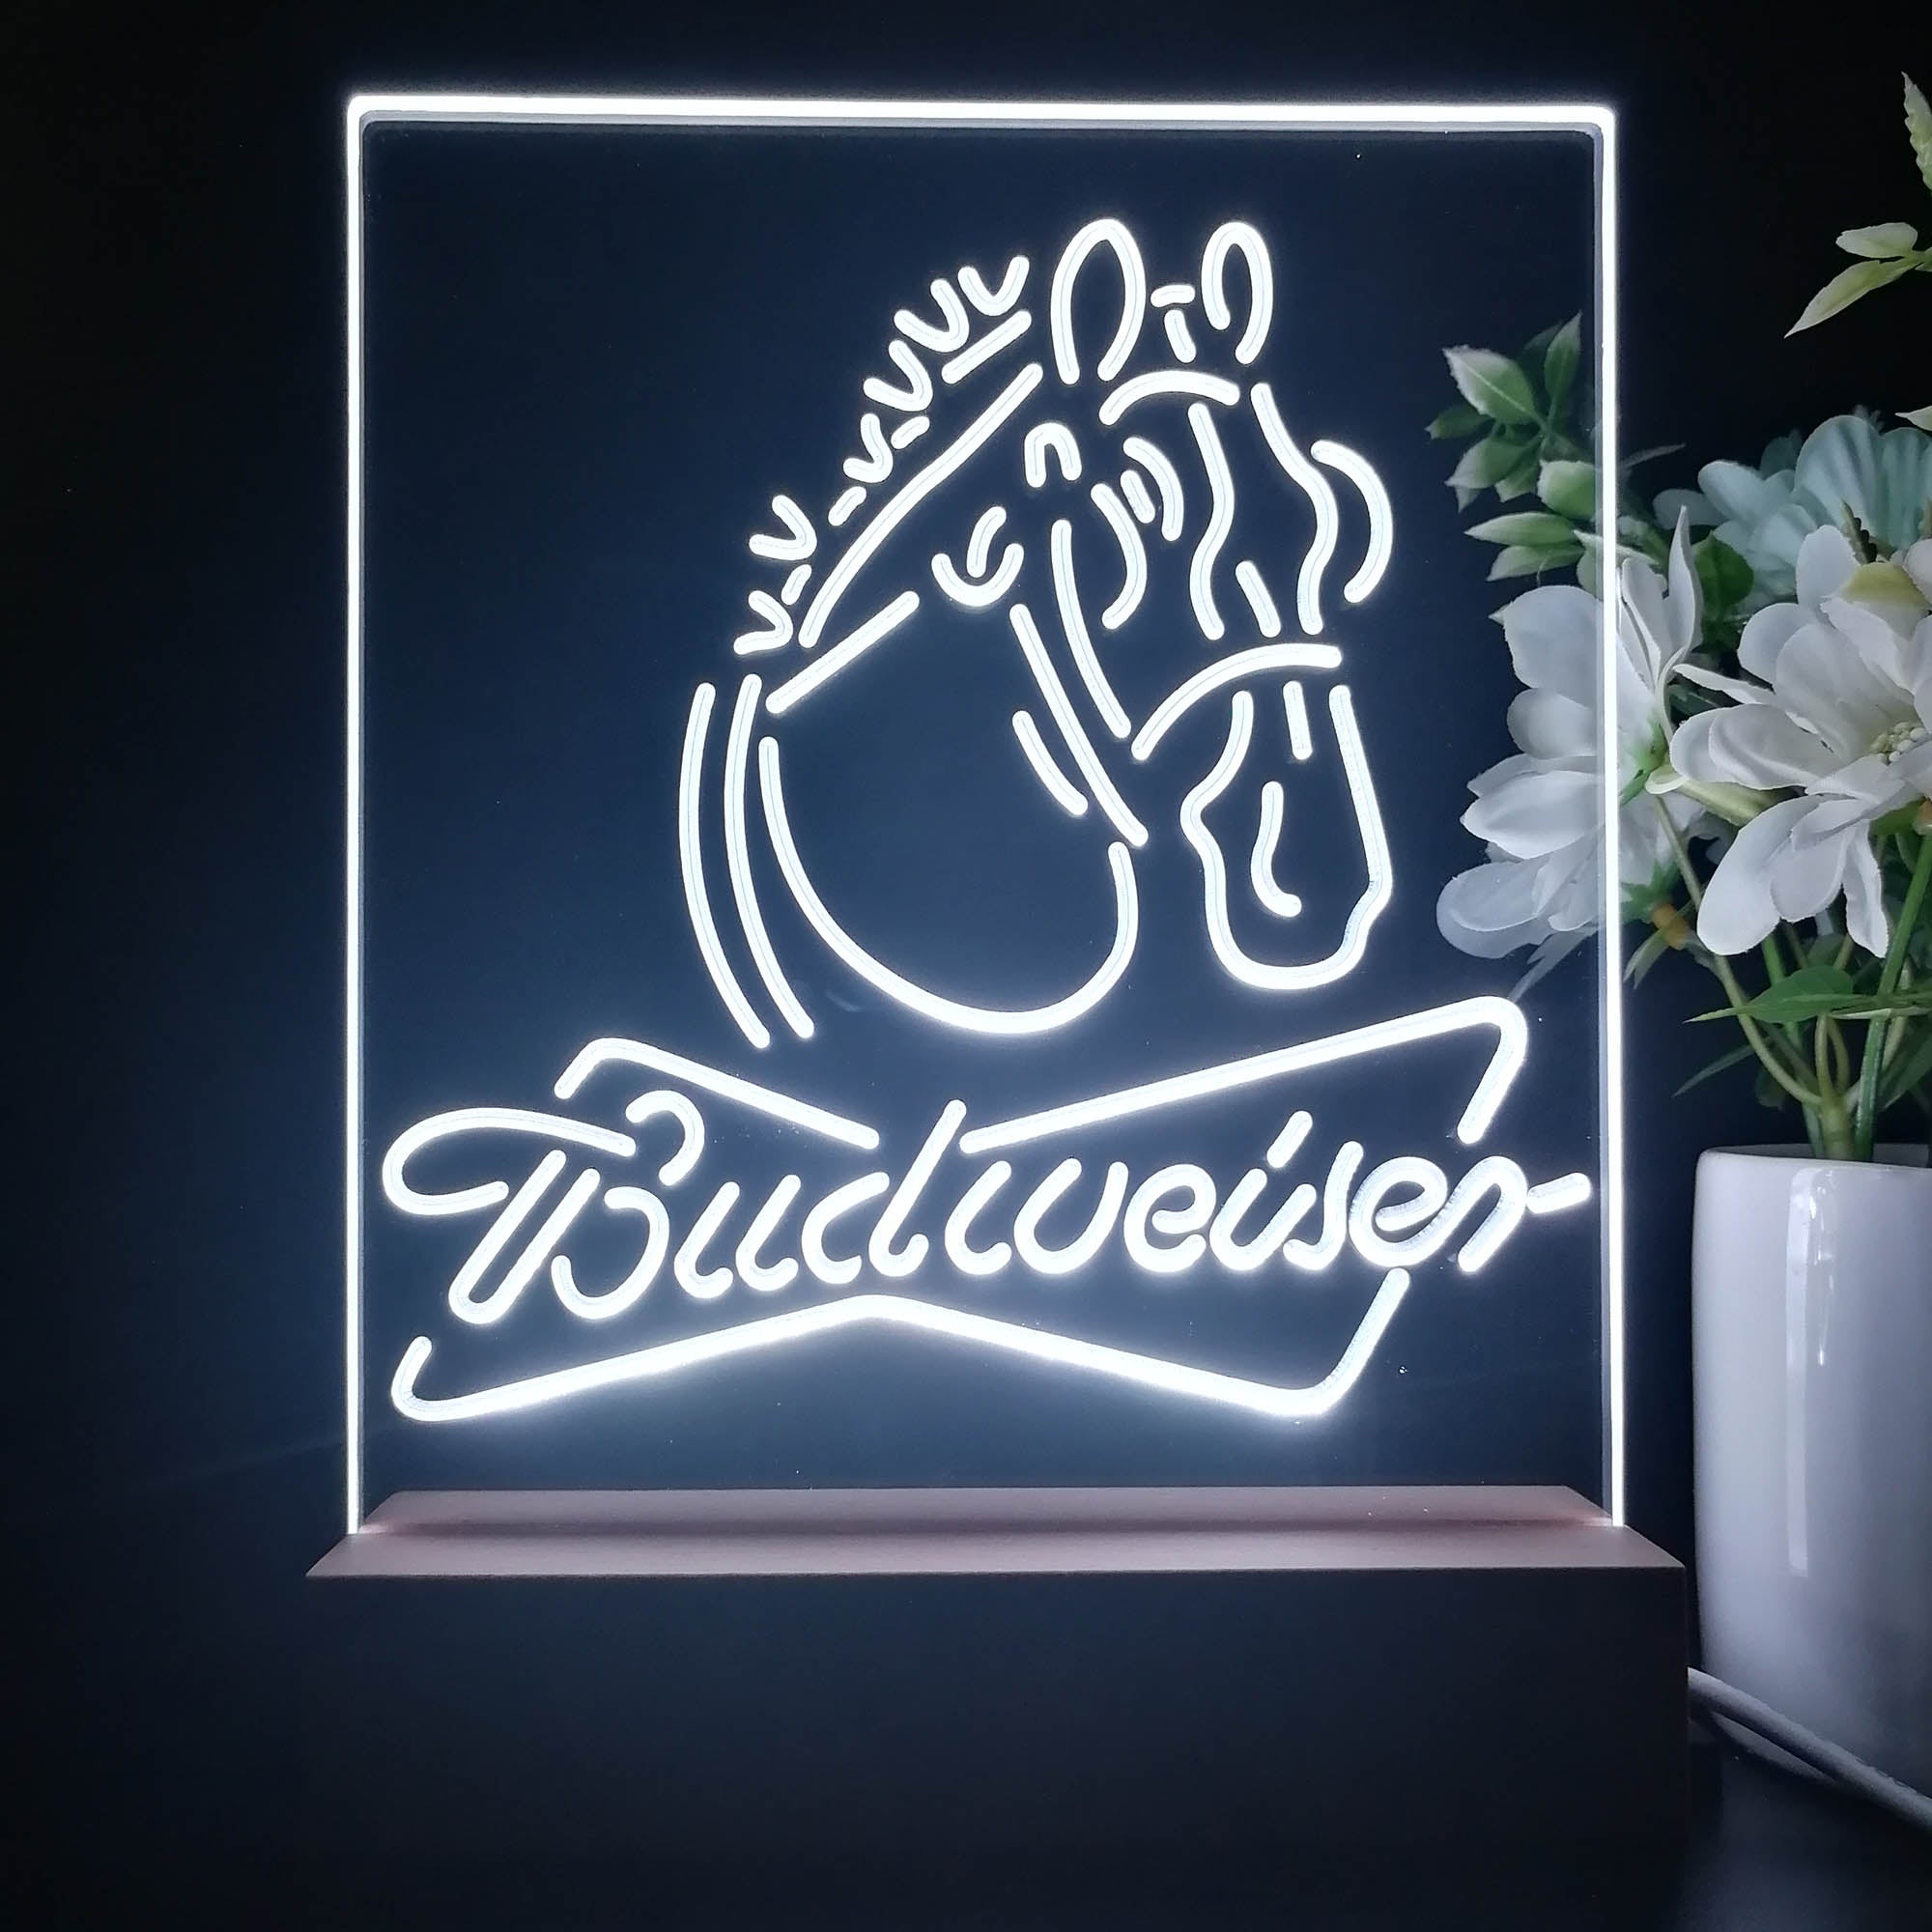 Budweiser Clydesdale Horse Head 3D Illusion Night Light Desk Lamp